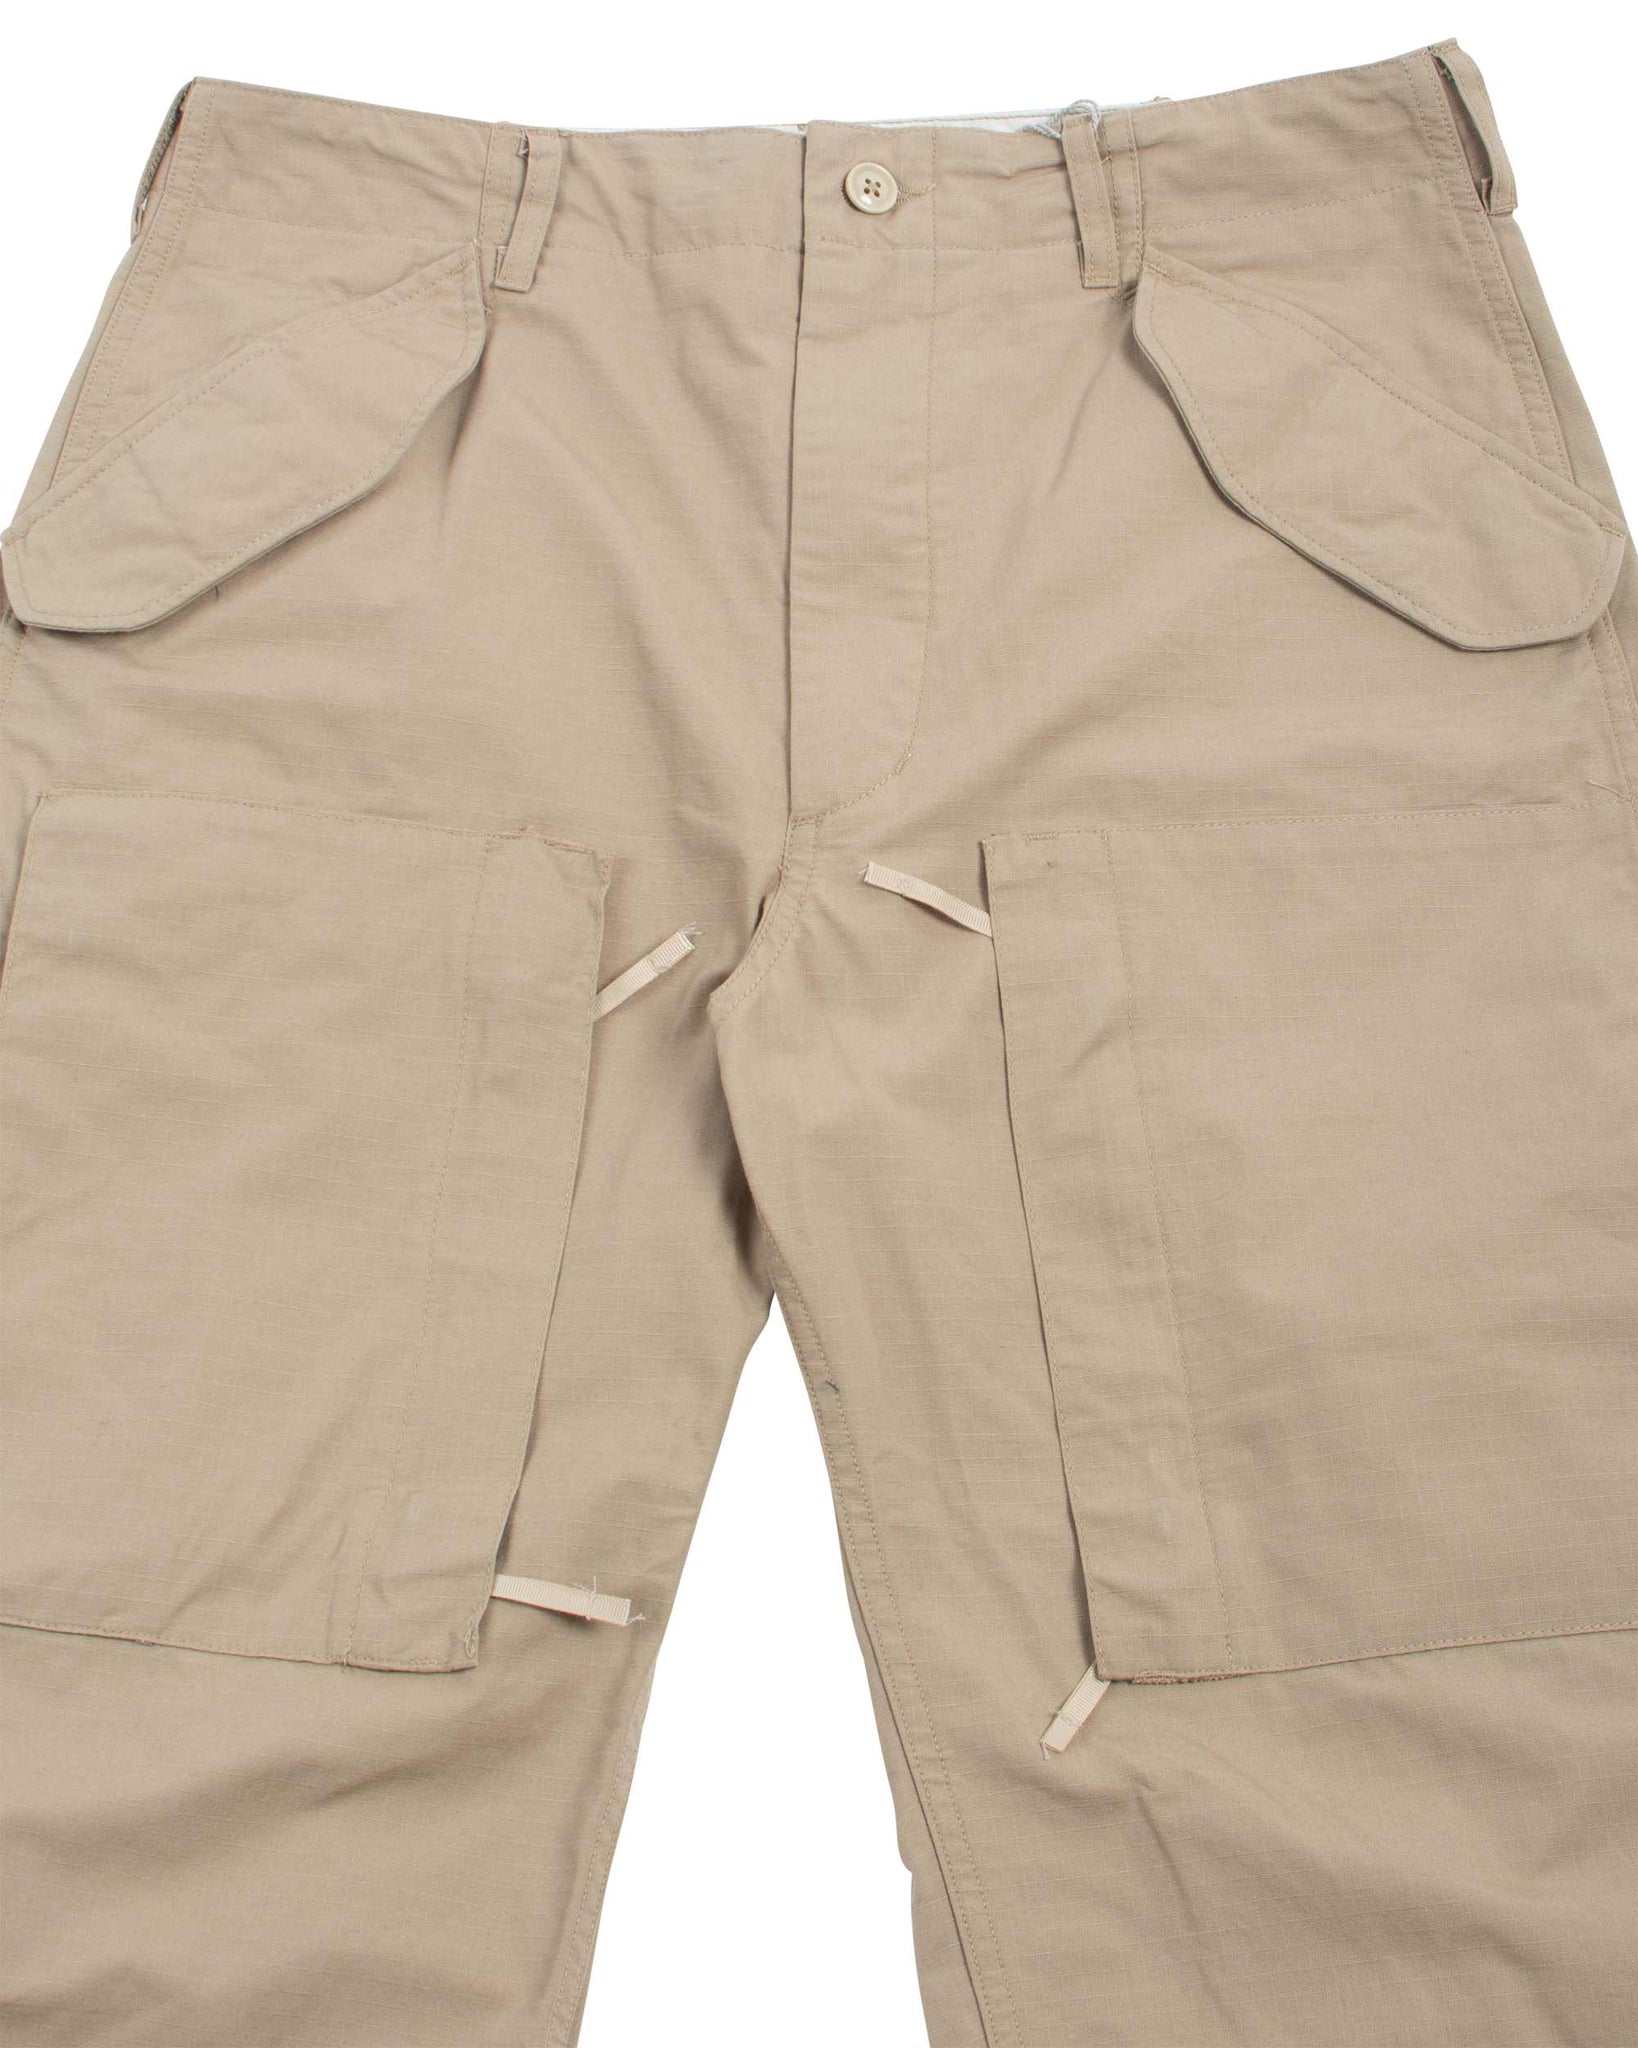 Engineered Garments Aircrew Pant Khaki Cotton Ripstop Detail